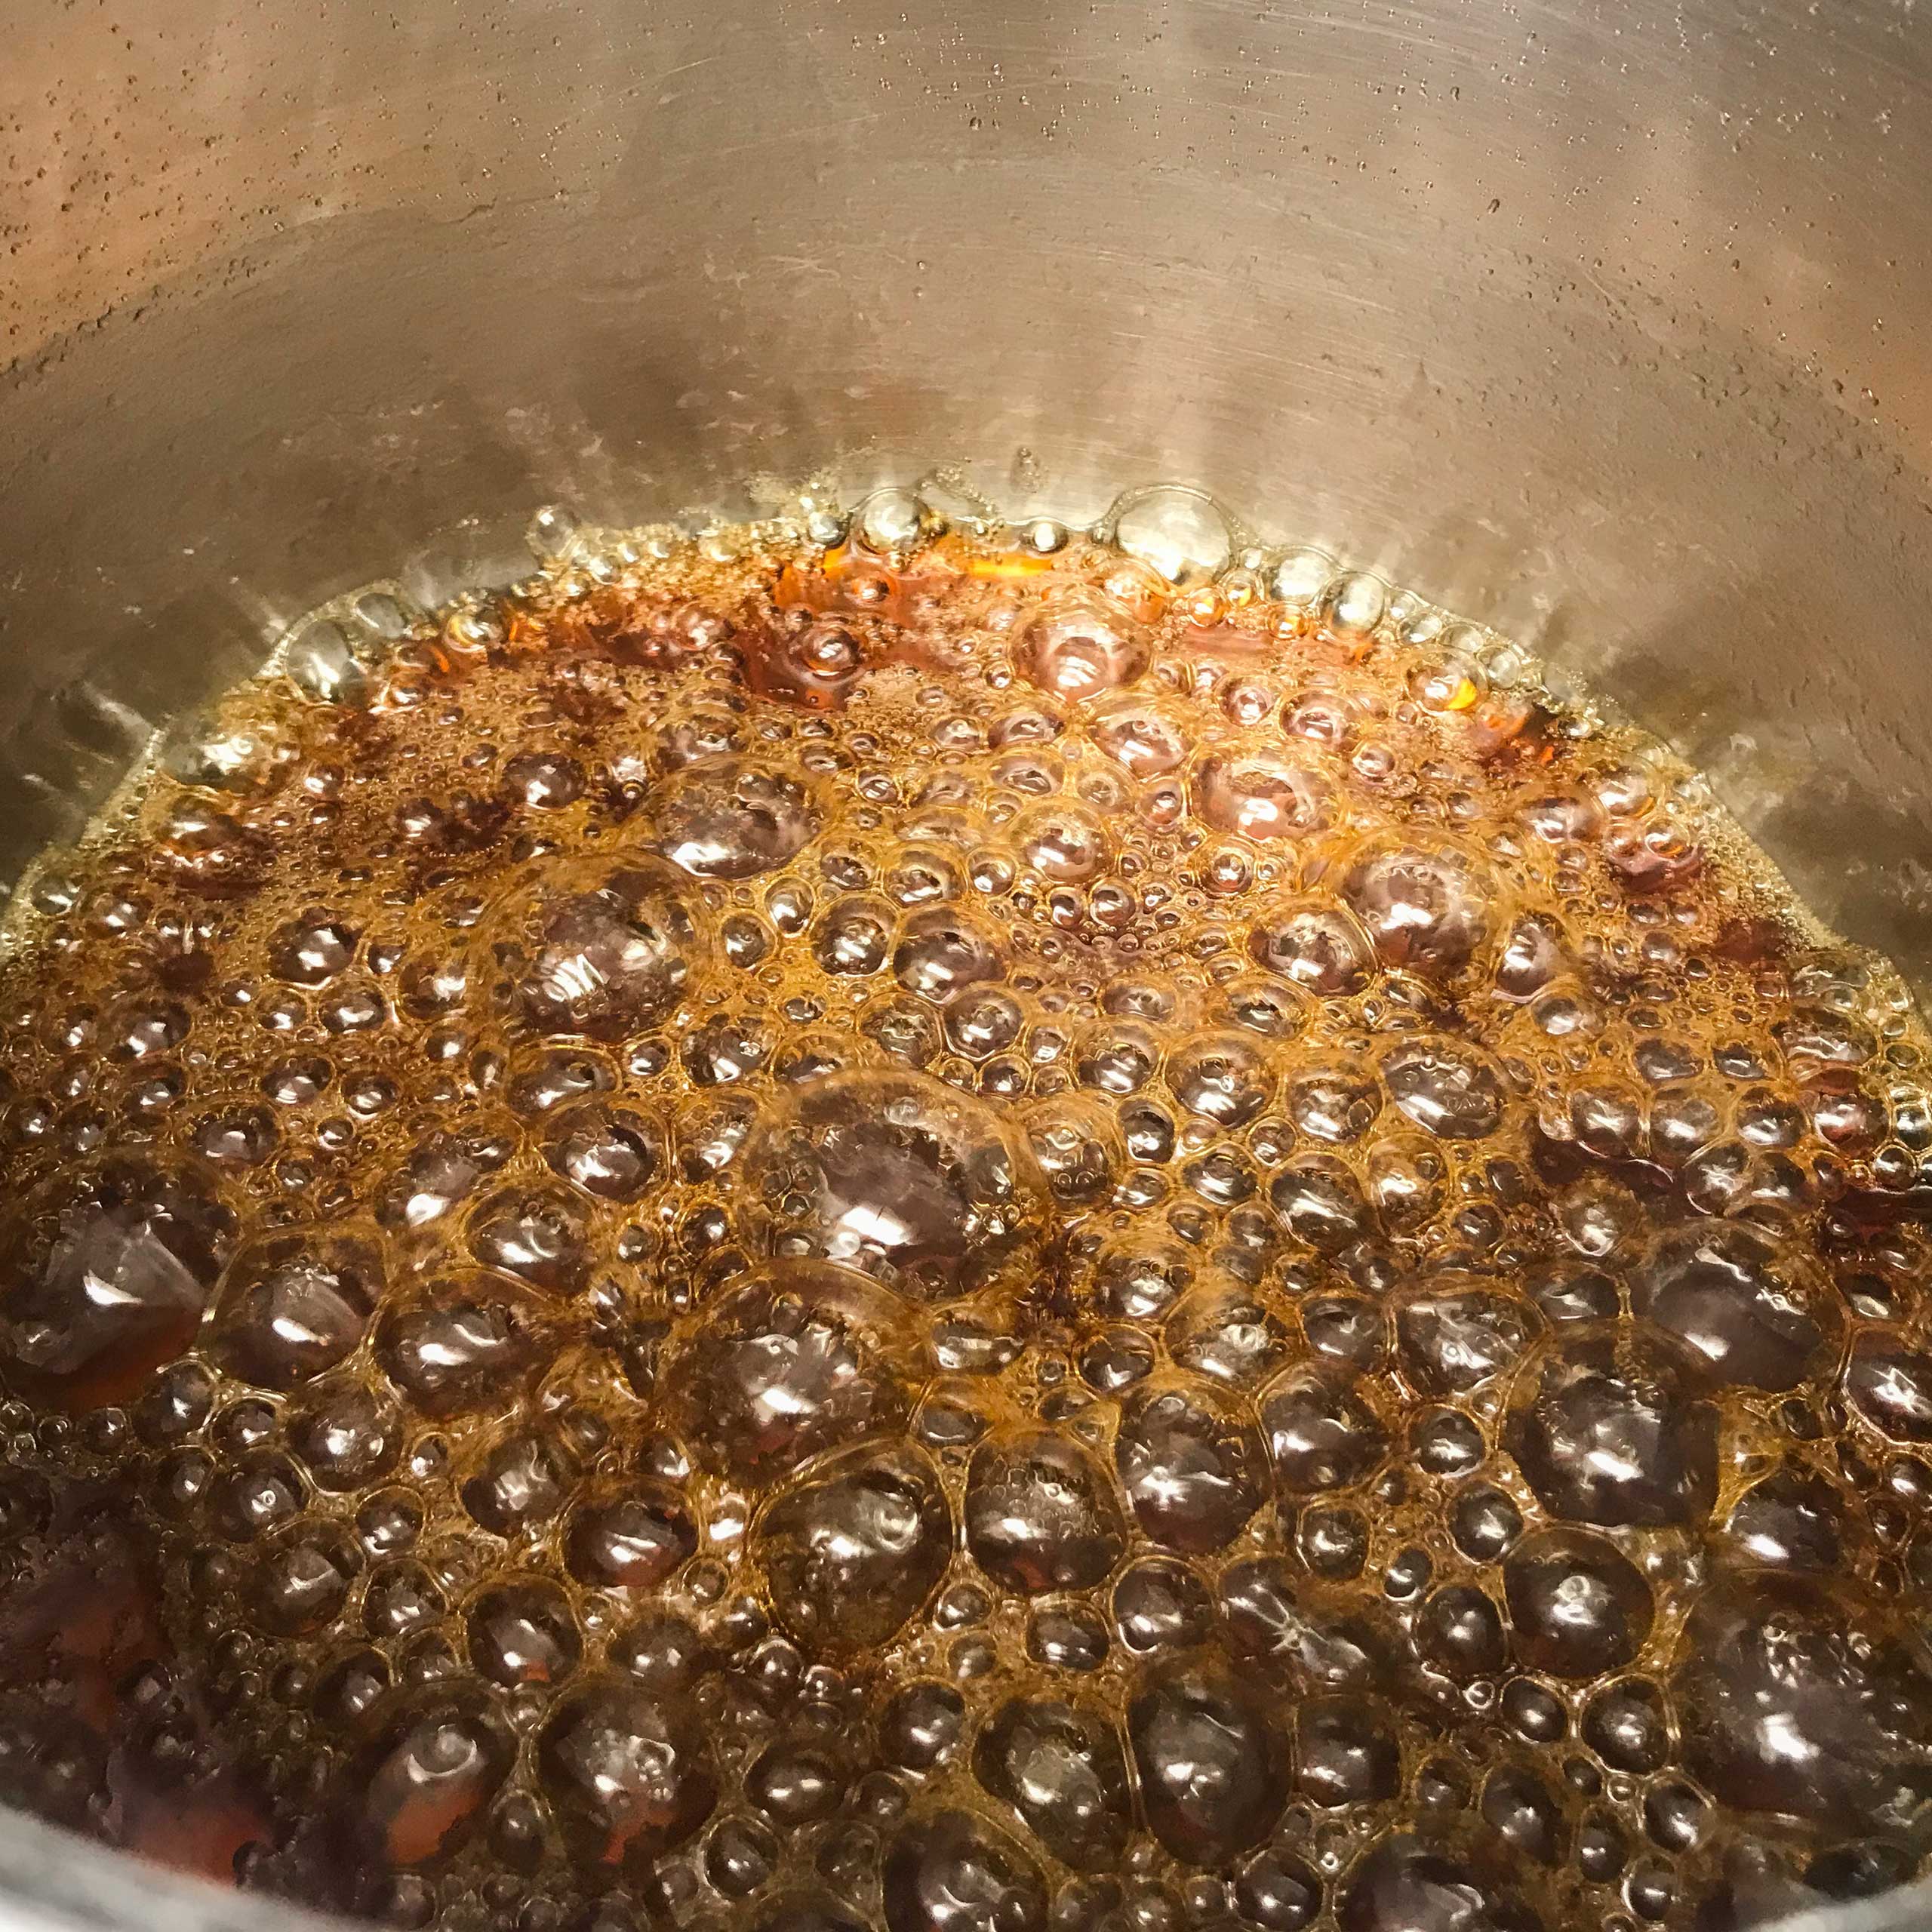 caramel boiling in pot.